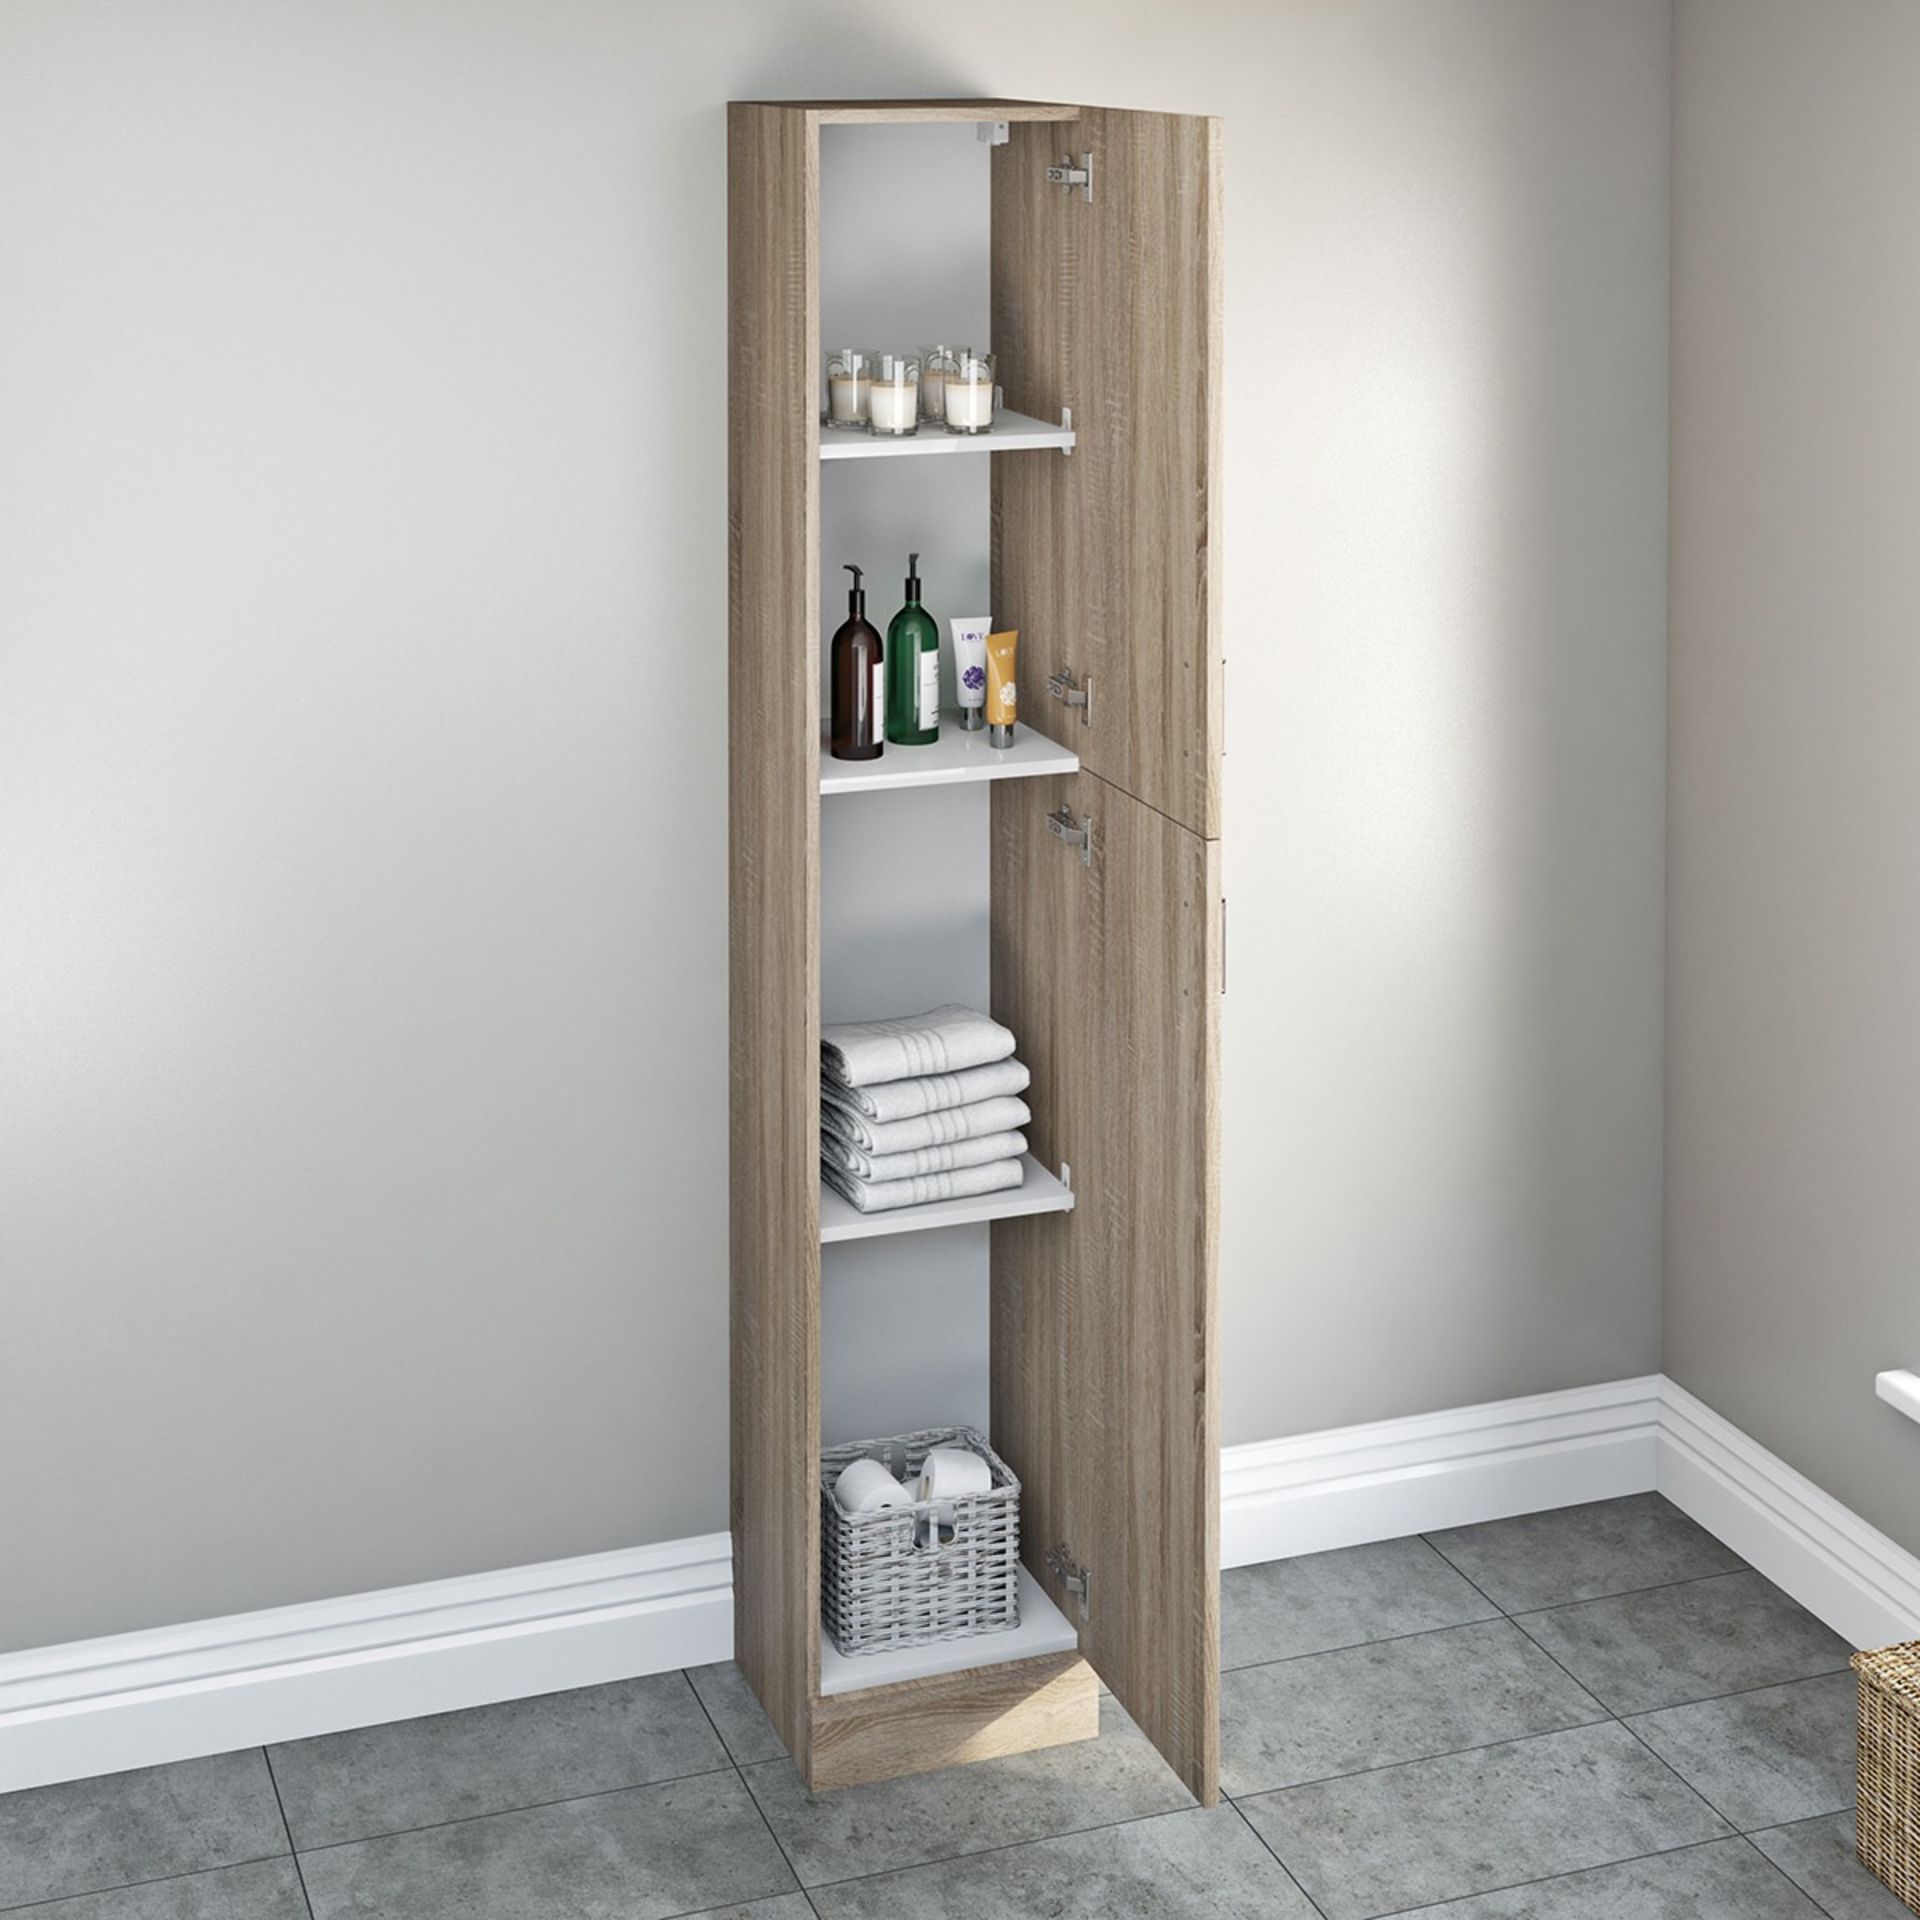 1 x Sienna Oak 300mm Tall Bathroom Storage Unit - Unused Stock - CL190 - Ref BR063 - Location: